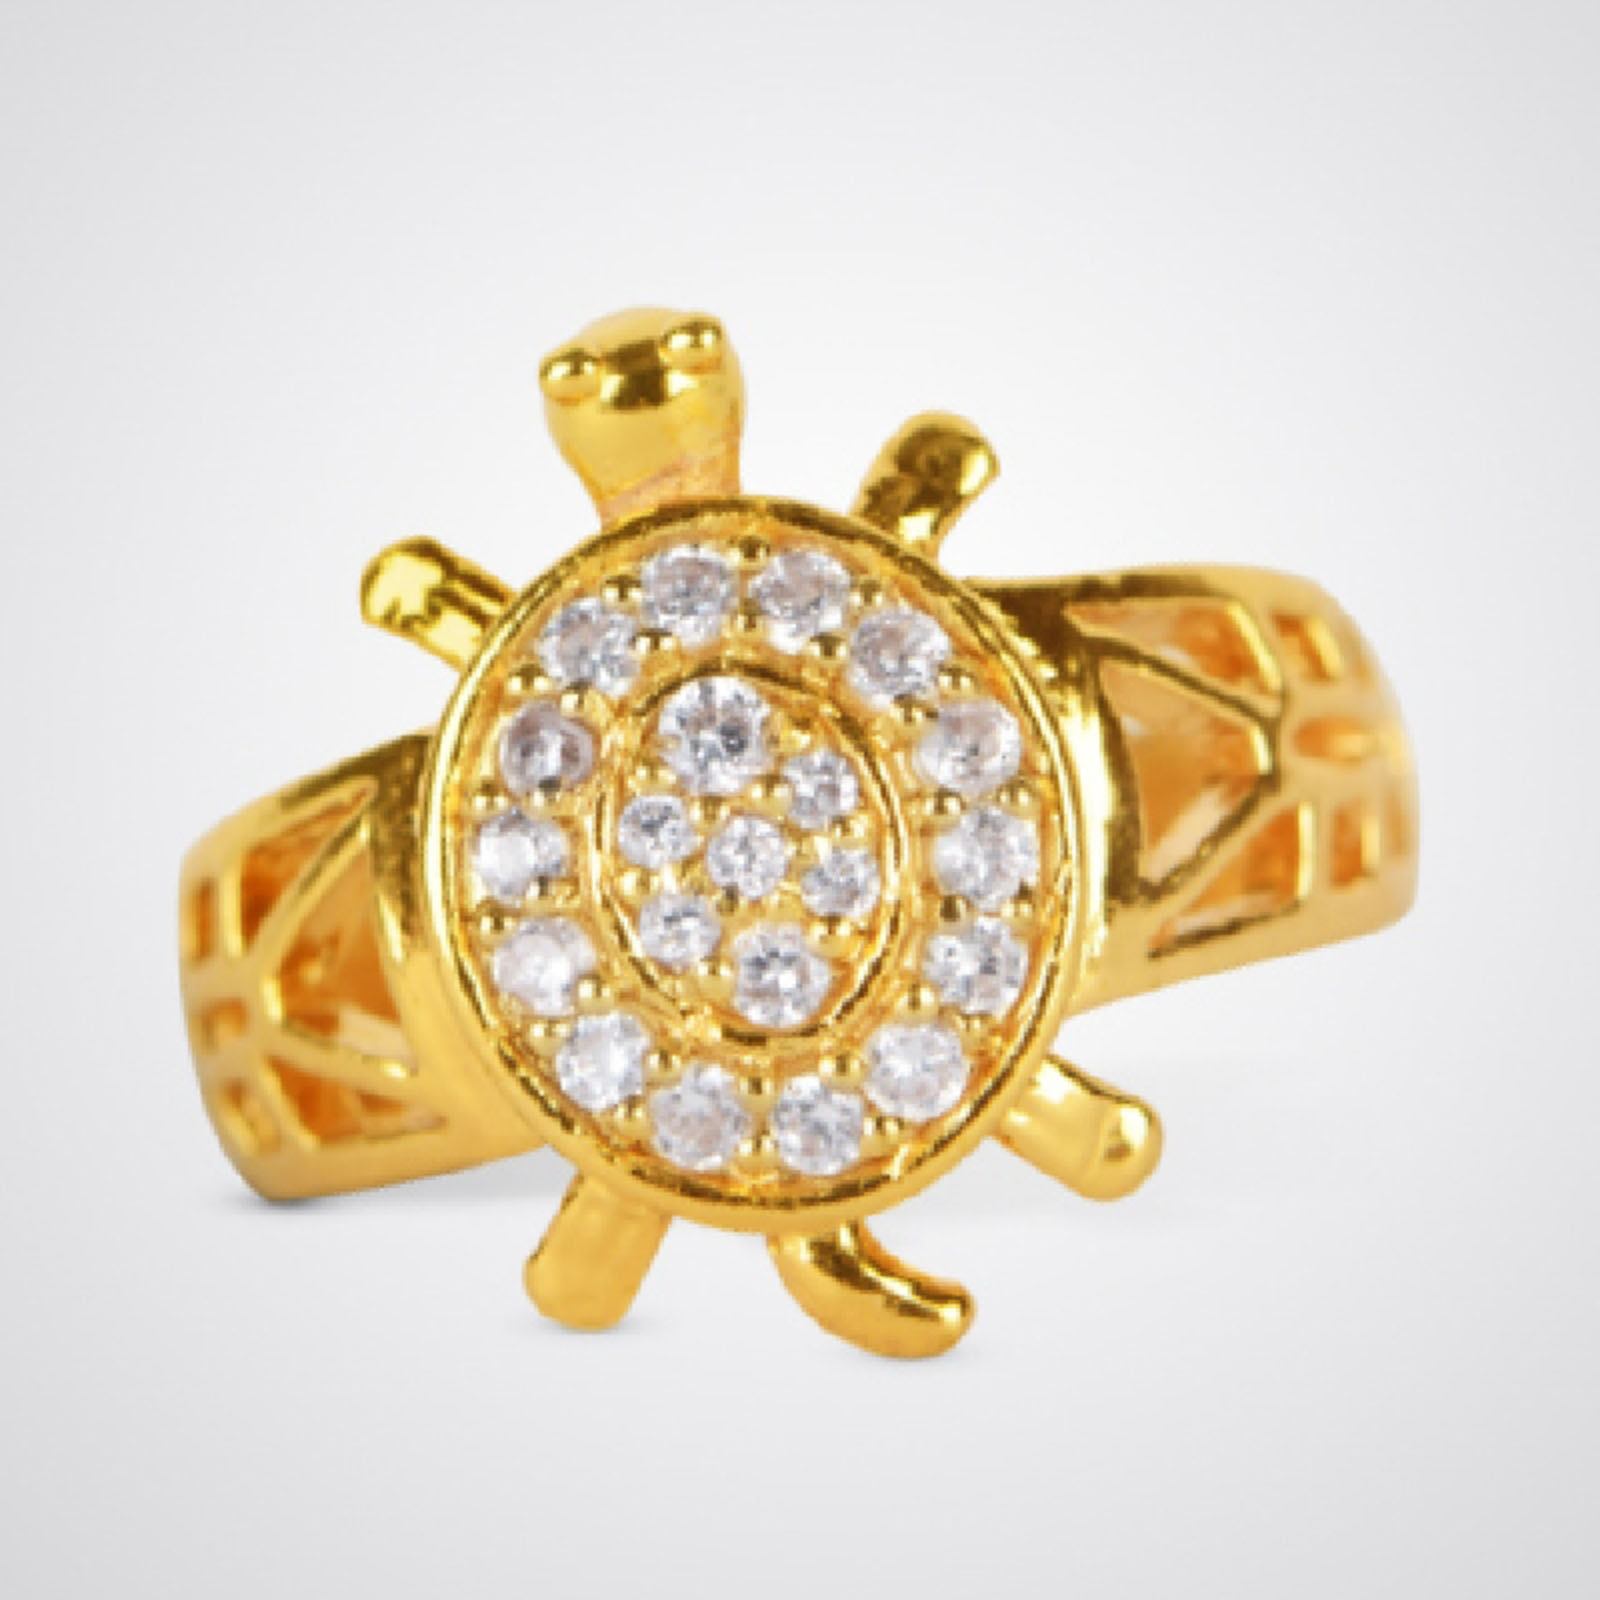 Meru Tortoise Ring/ Turtle Ring/ Kachua Ring made in Panchdhatu Adjustable Ring with studded Zircons